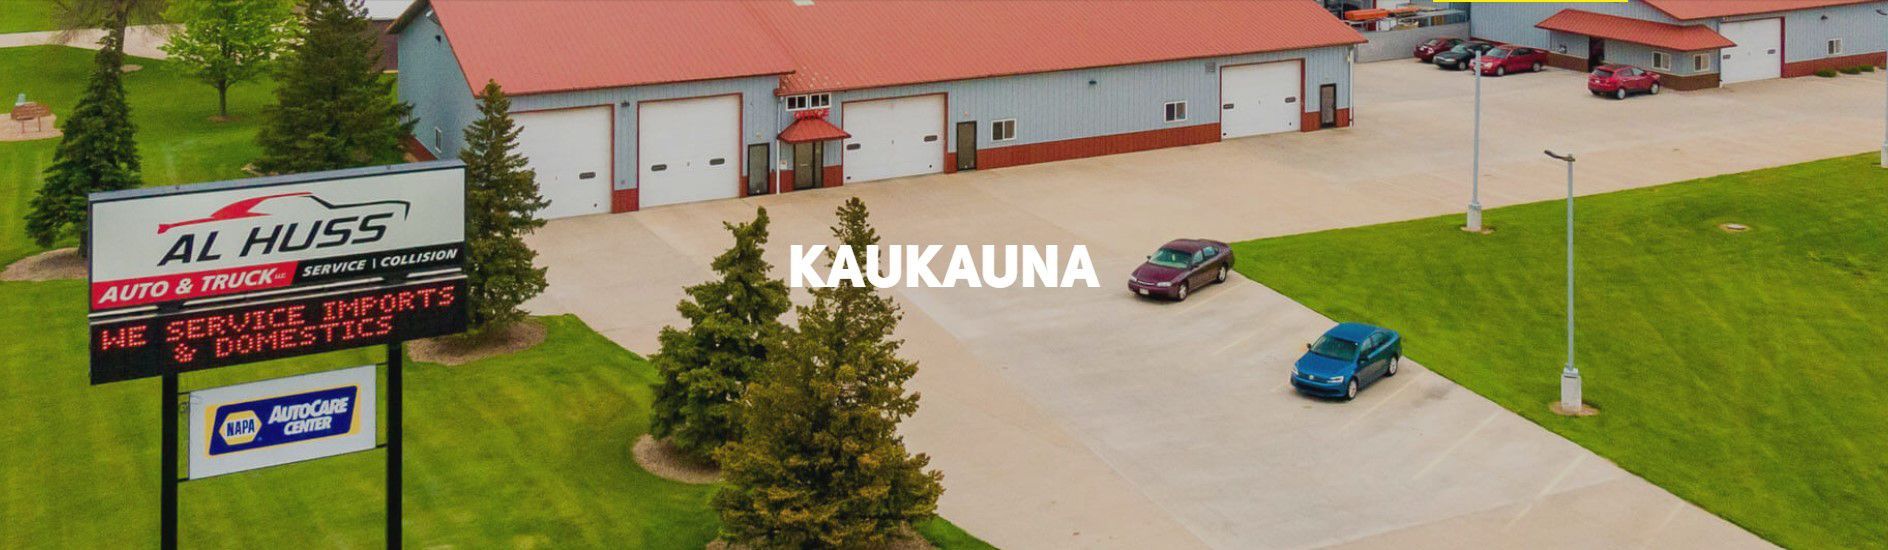 Kaukauna, WI Location